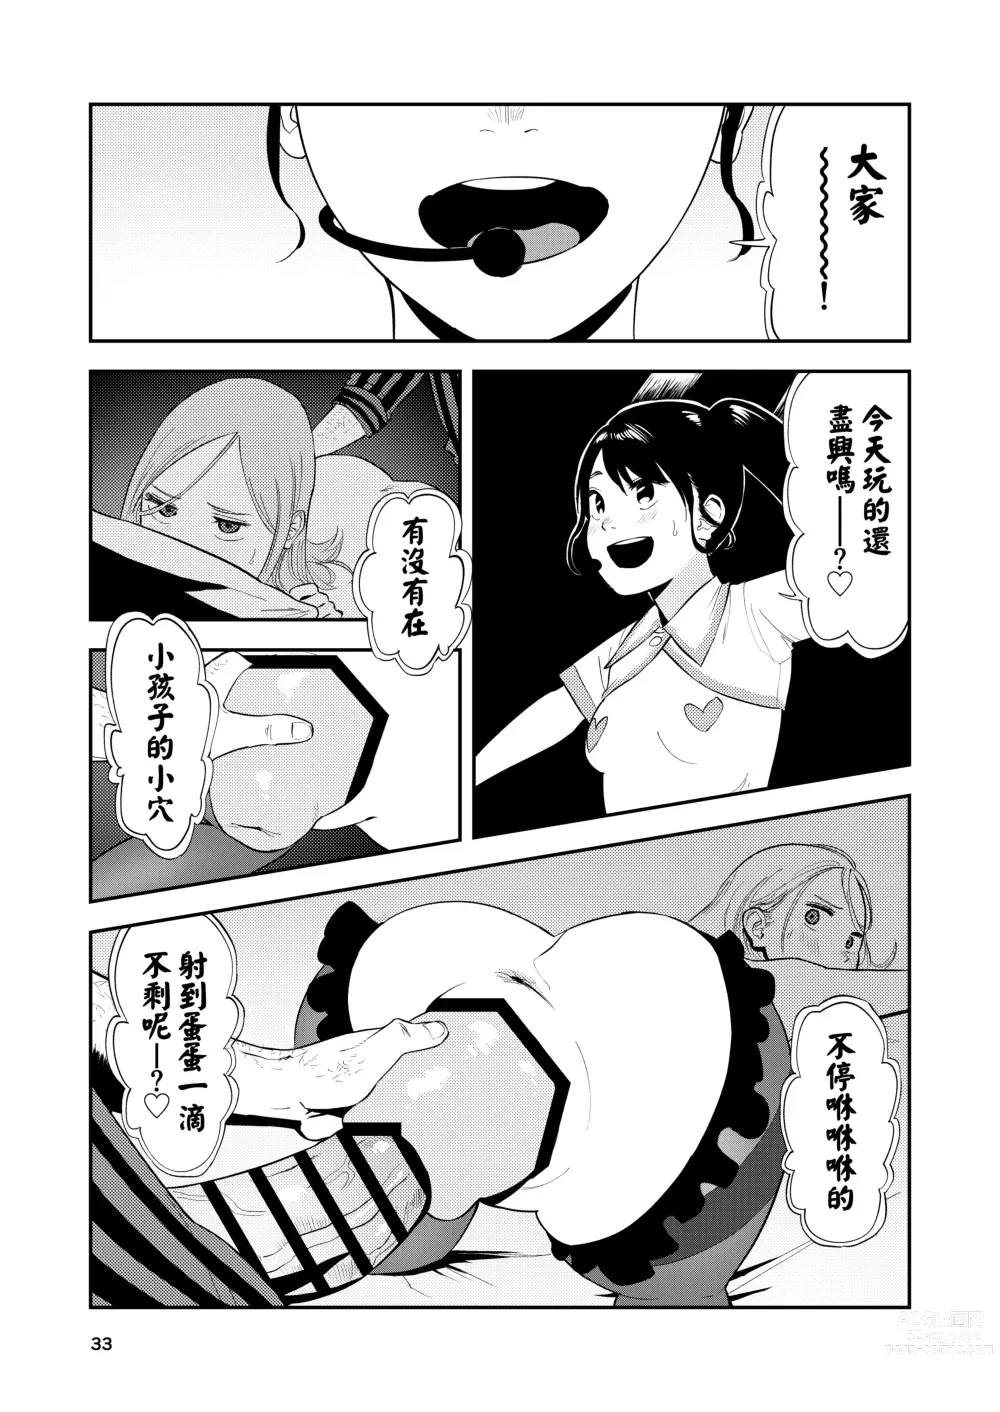 Page 33 of doujinshi LOLITA COMPLEX